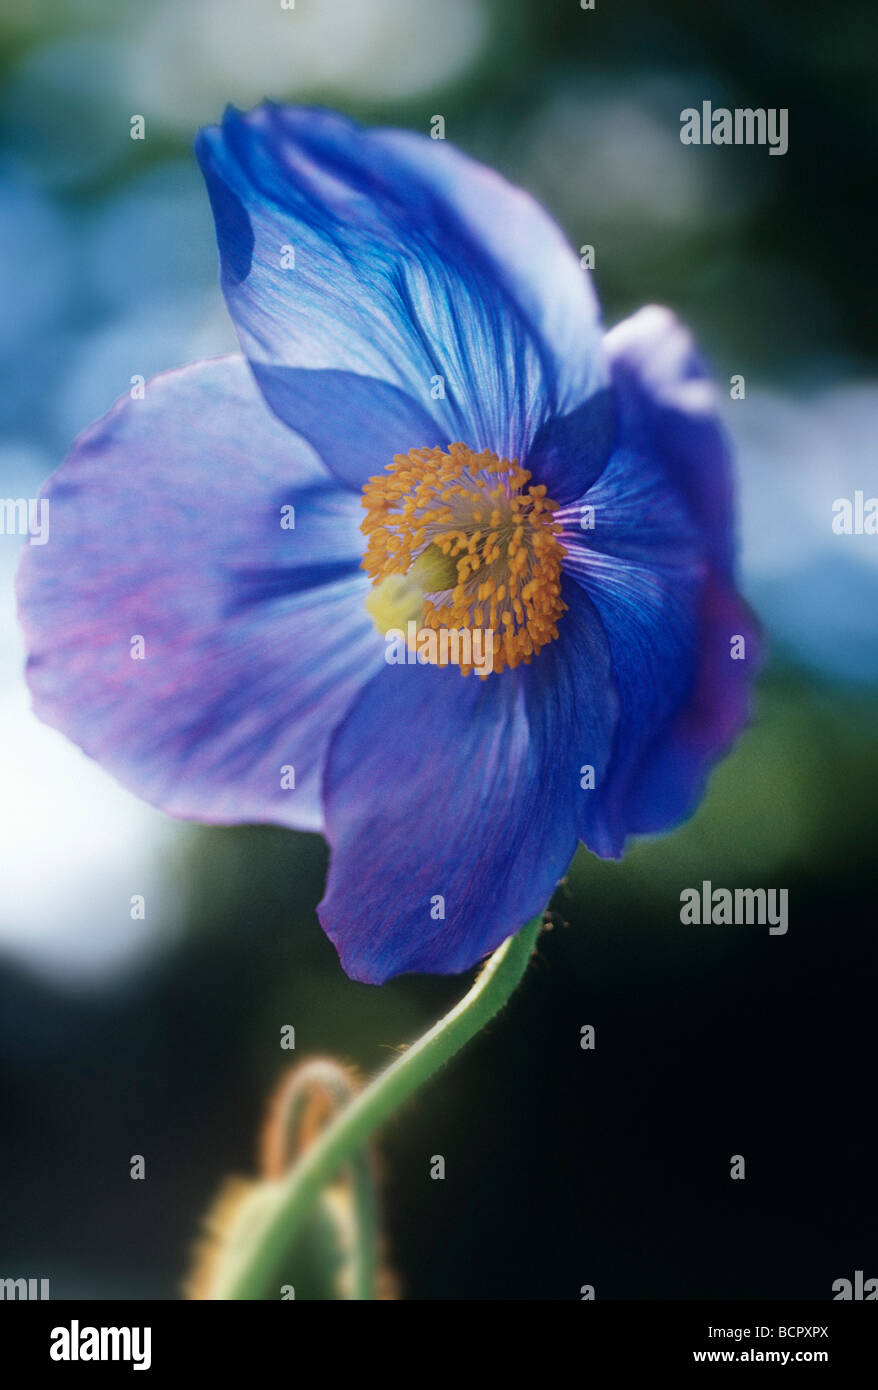 Meconopsis ‘Branklyn’ Poppy, single blue flower. Stock Photo